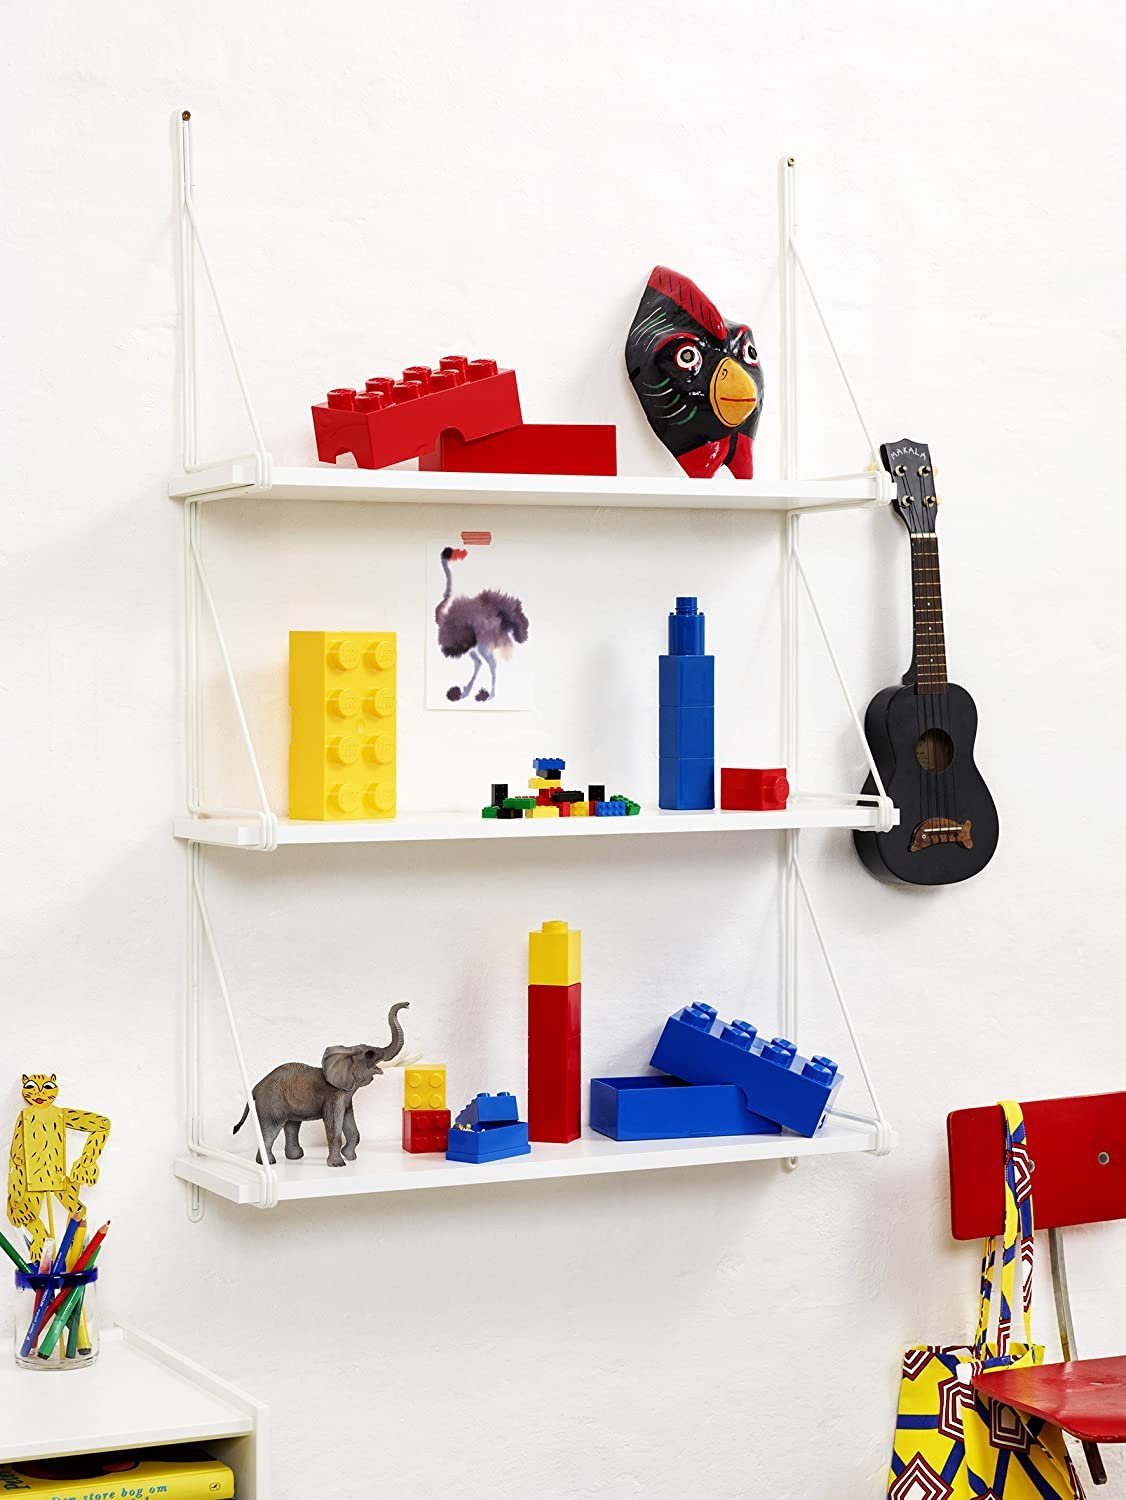 Aufbewahrungsbox - Lego rot Box Classic Copenhagen Room